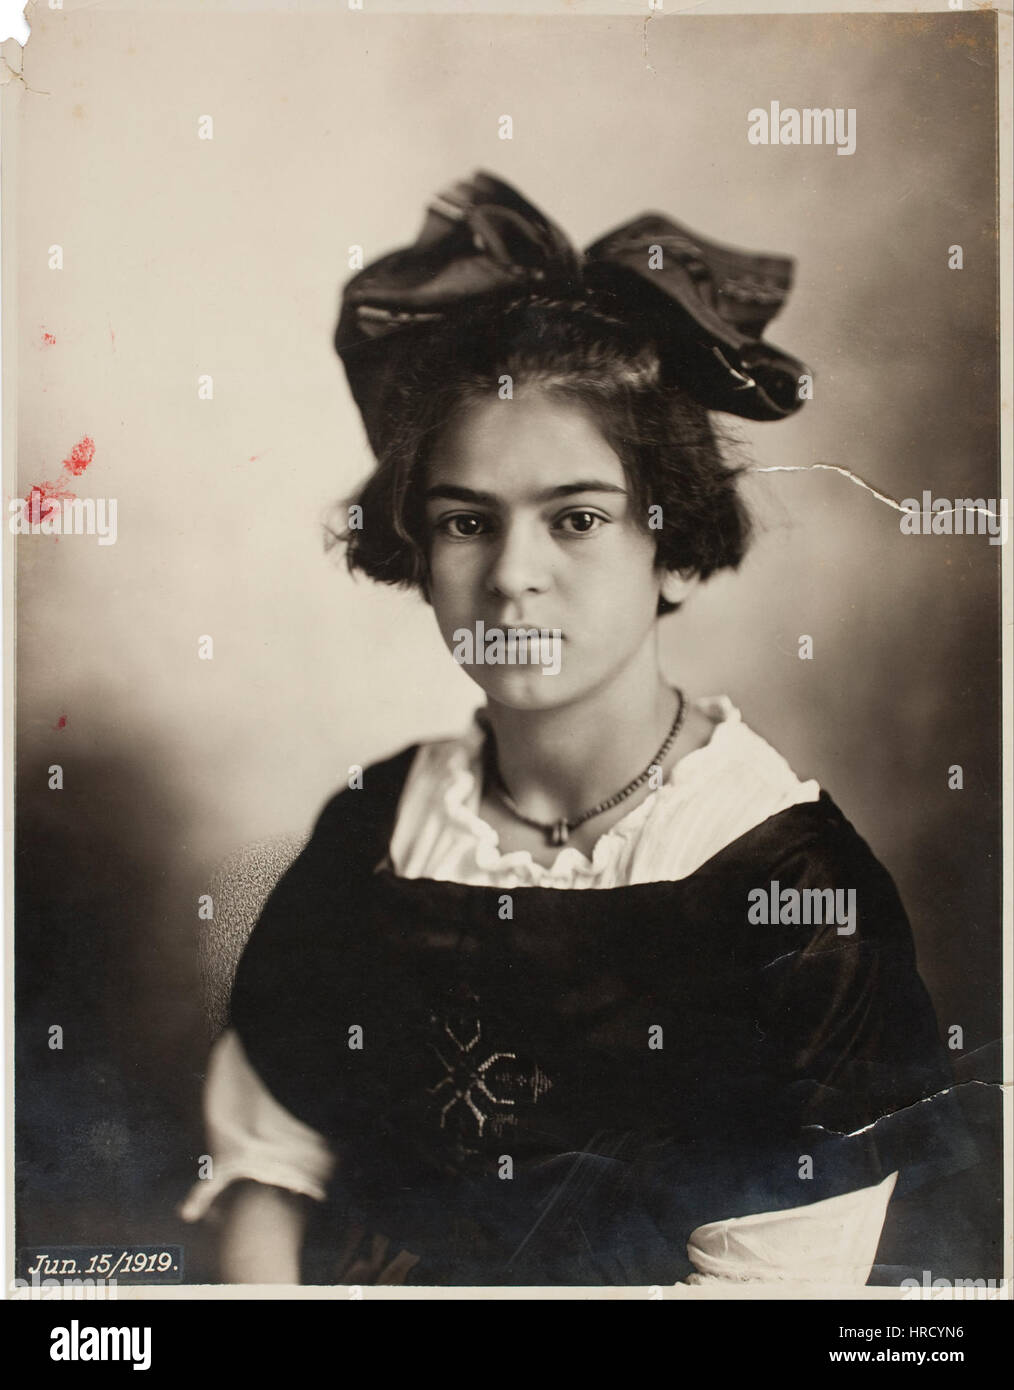 Guillermo Kahlo - Frida Kahlo, June 15, 1919 - Google Art Project Stock Photo